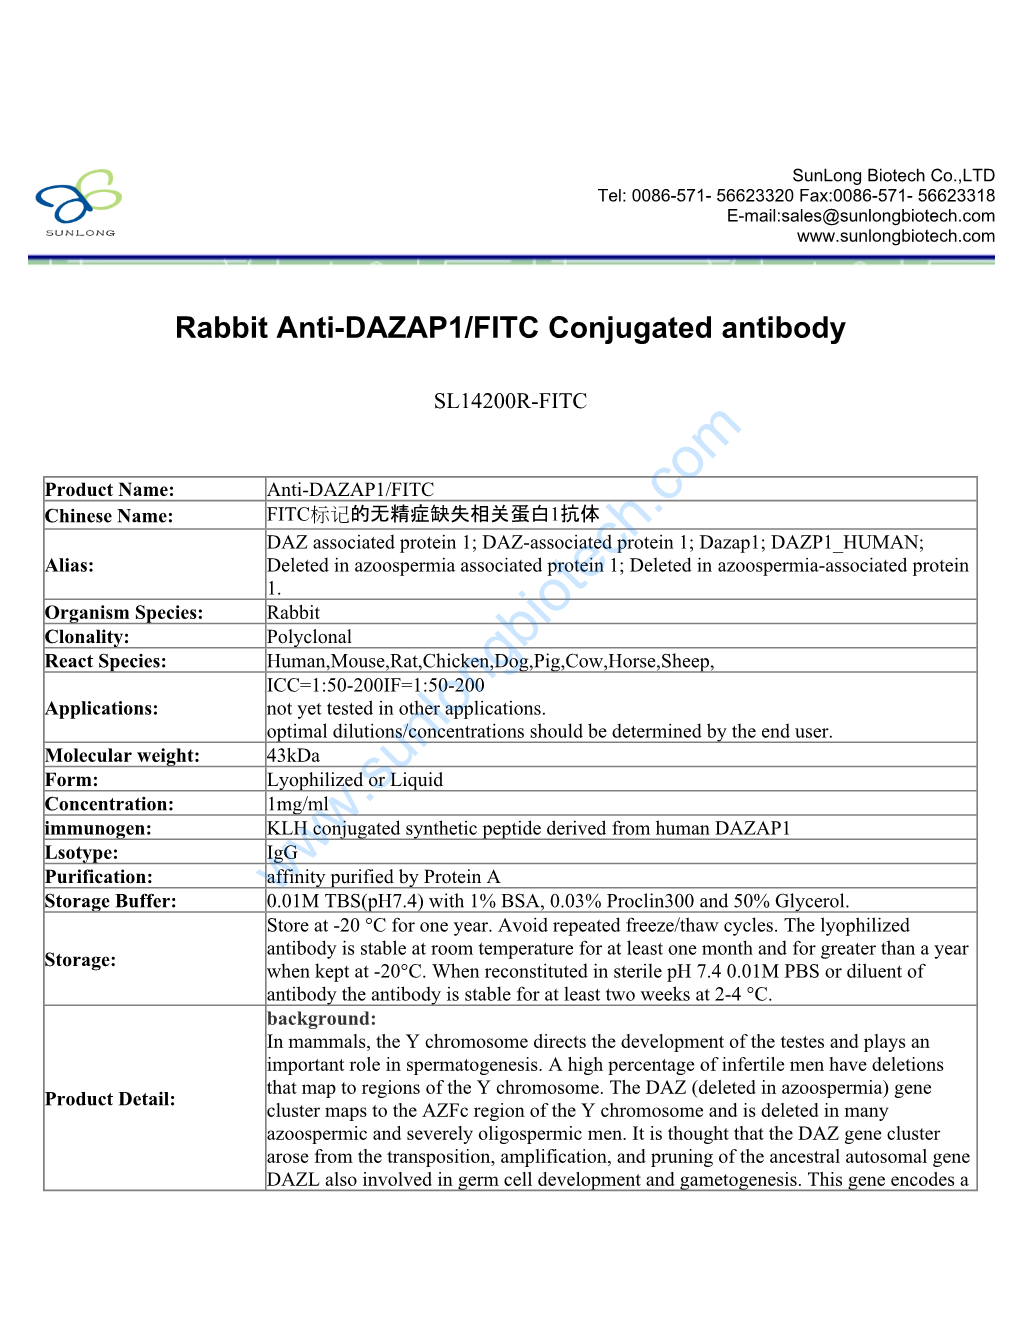 Rabbit Anti-DAZAP1/FITC Conjugated Antibody-SL14200R-FITC